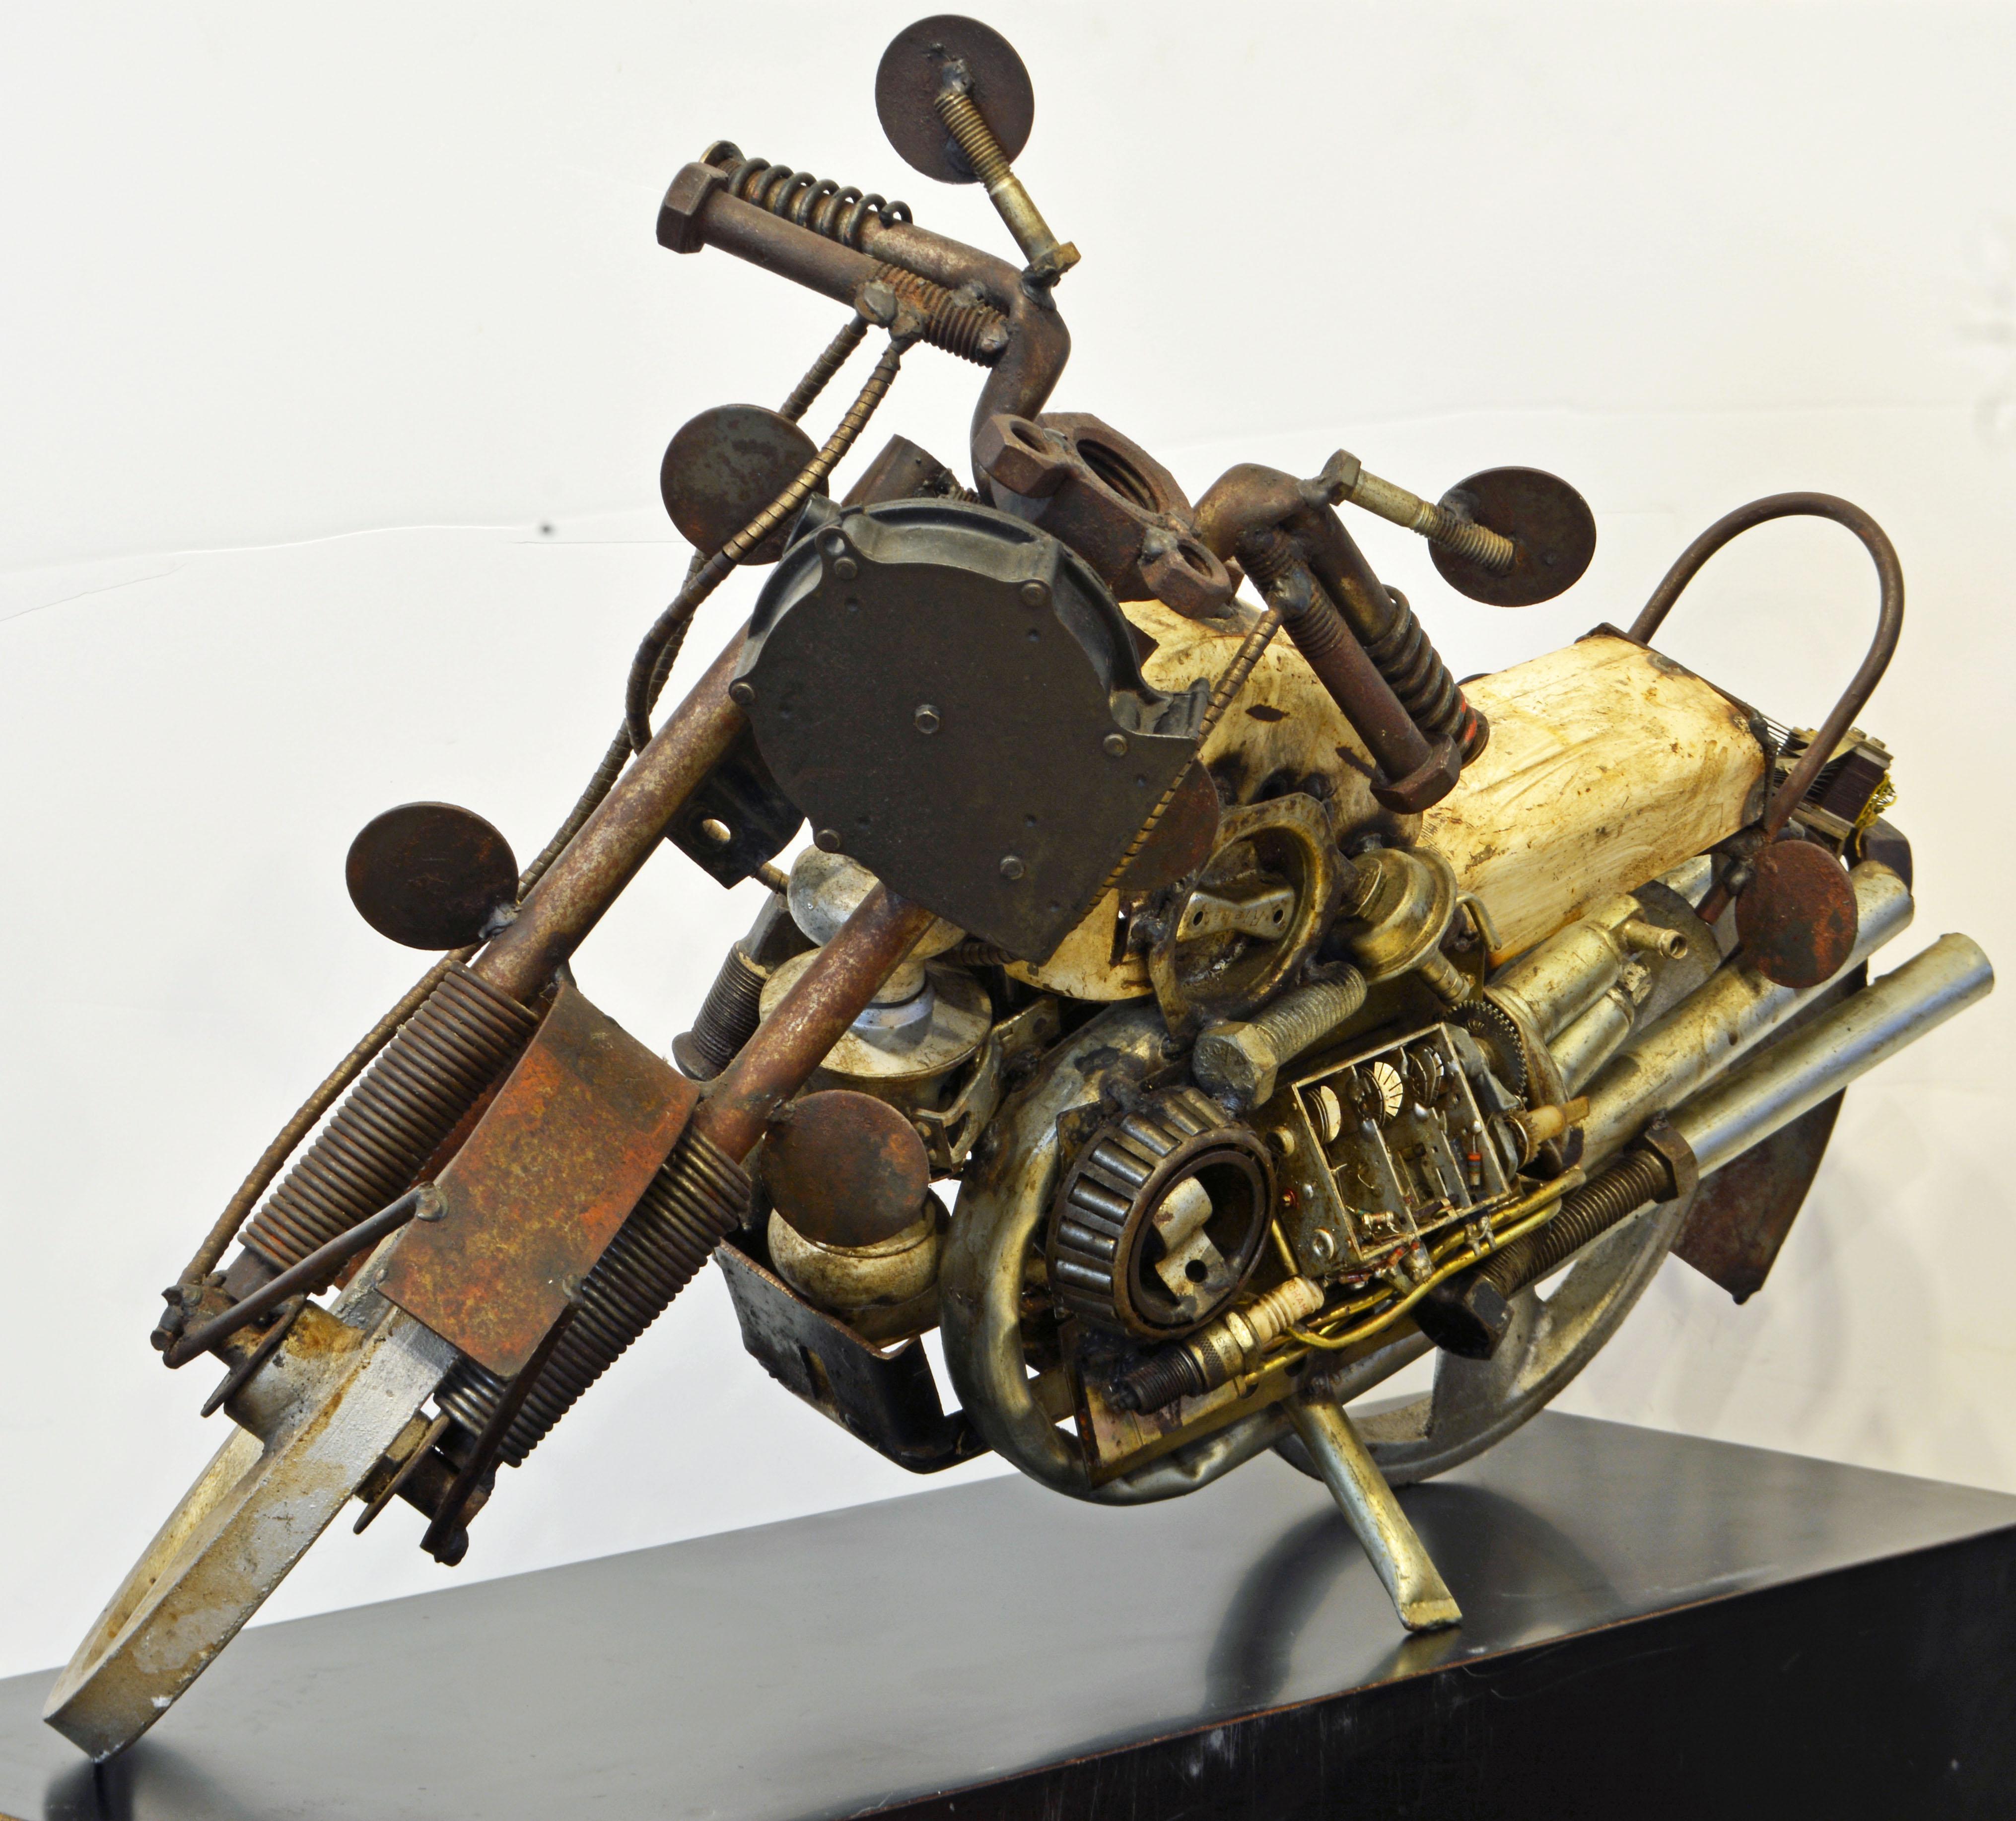 North American Unique Folk Art Scrap Metal Motorcycle Sculpture